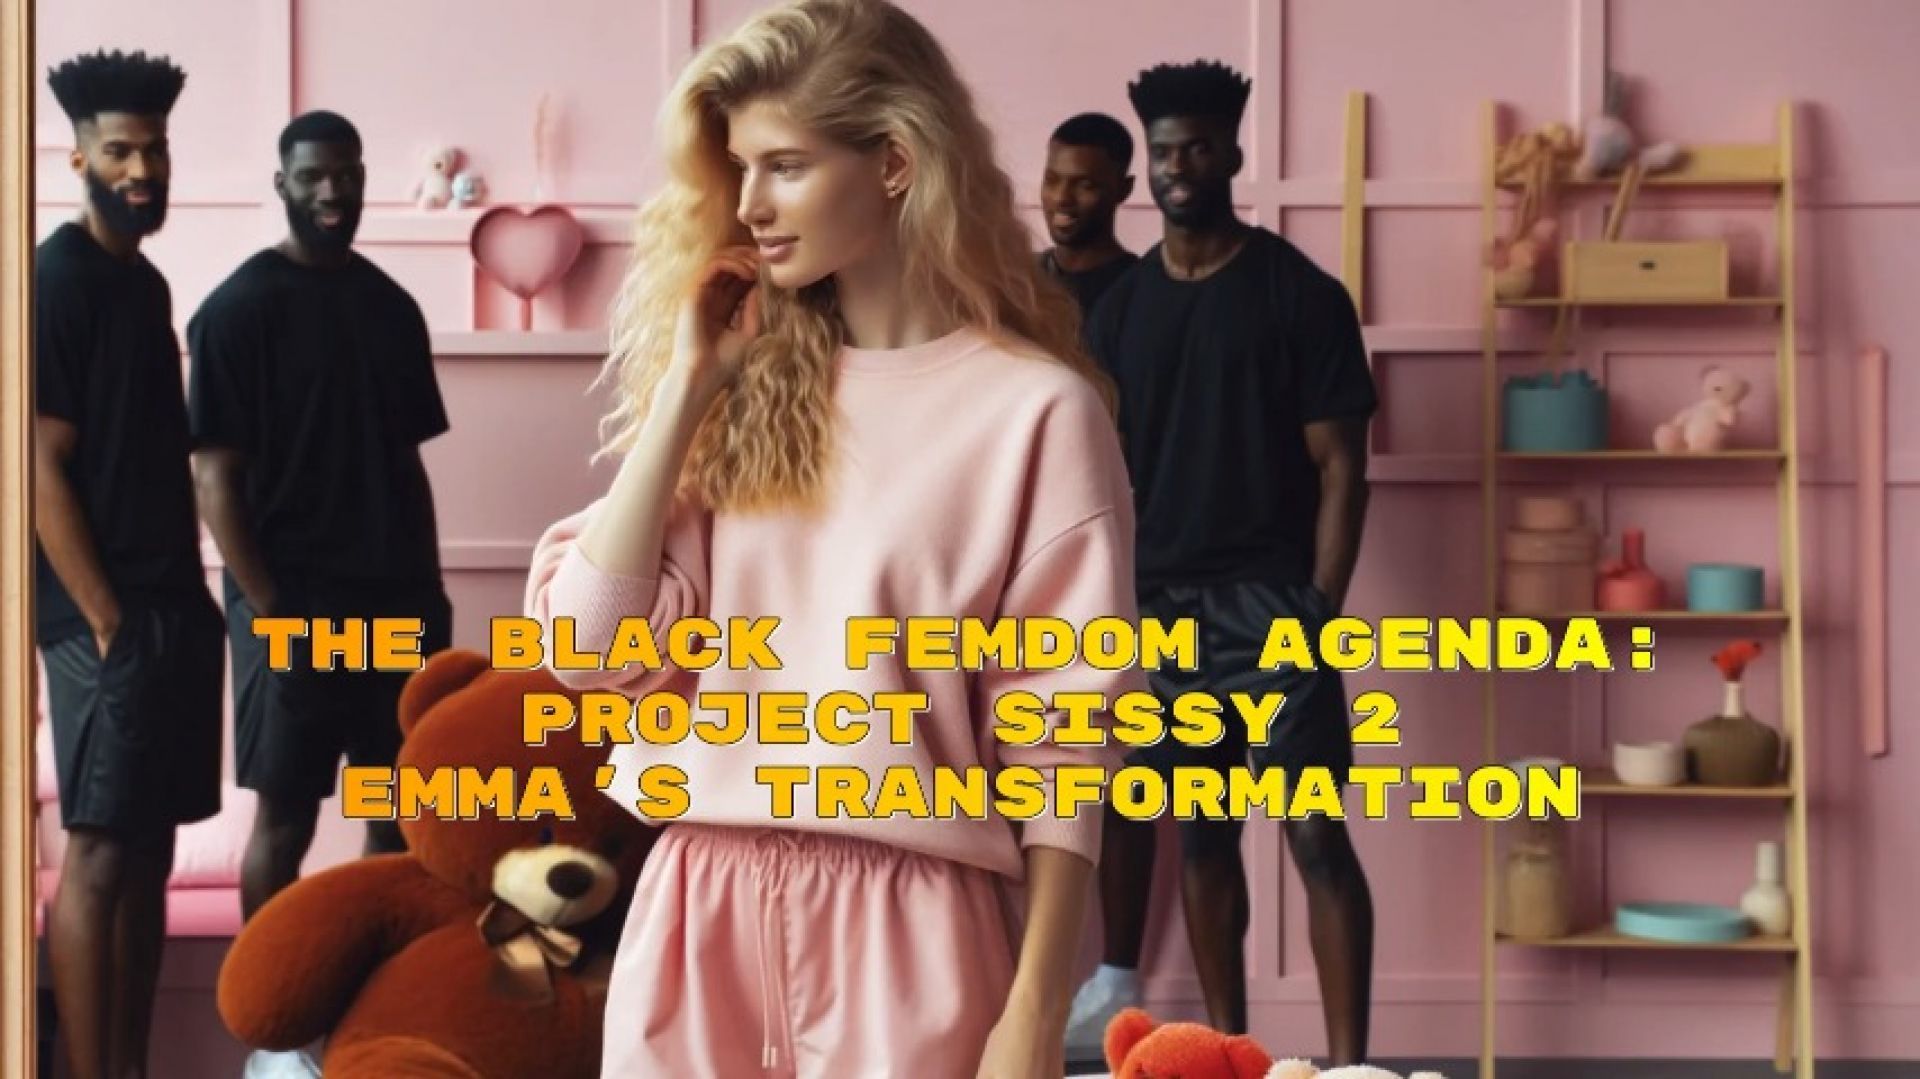 The Black Femdom Agenda: Project White Sissy Emma